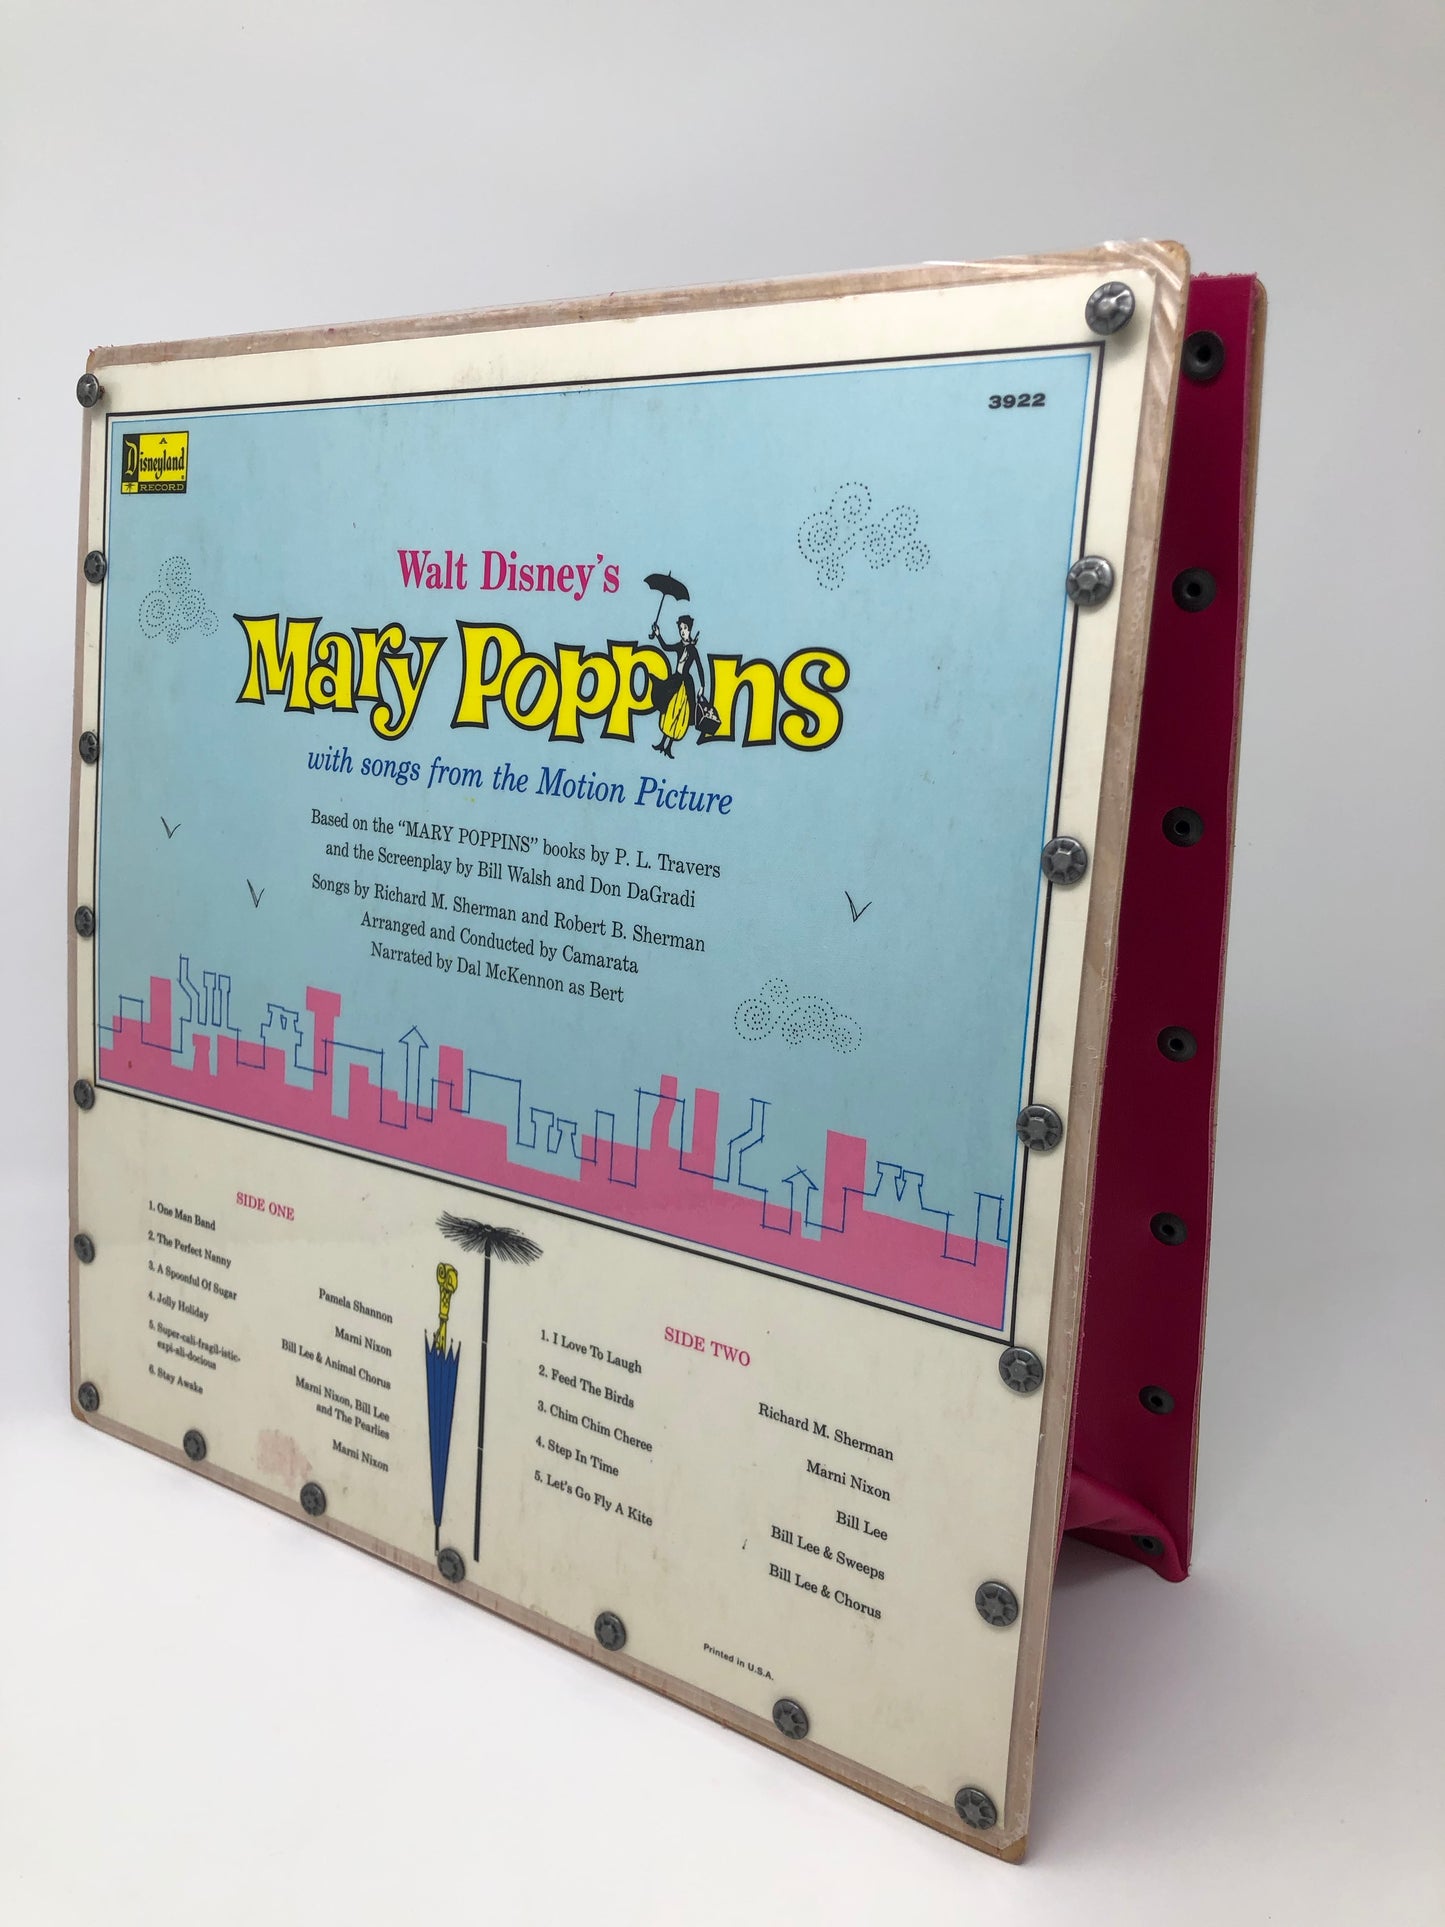 Vintage Record Album Tote - Disney Mary Poppins